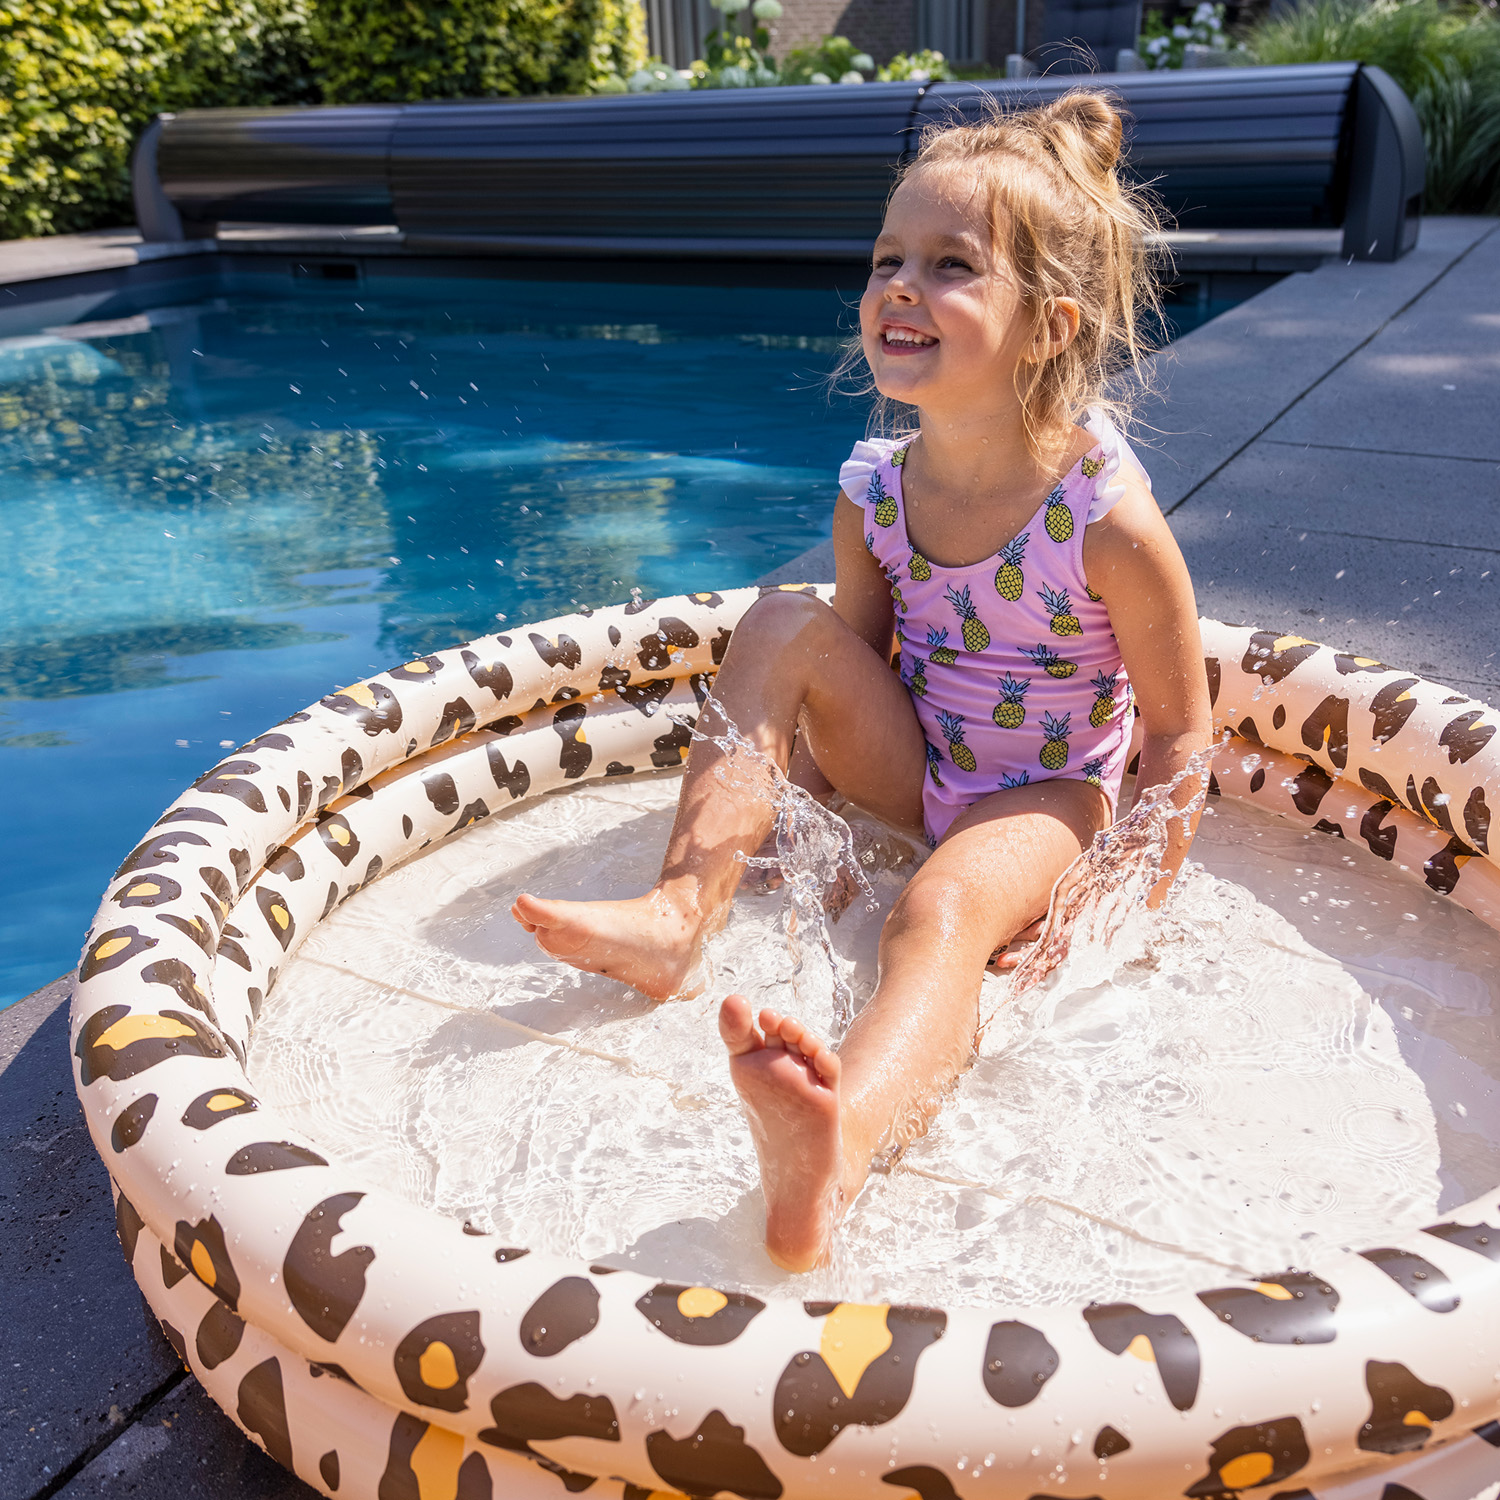 Swim Essentials | Baby Pool 100cm | Beige Leopard